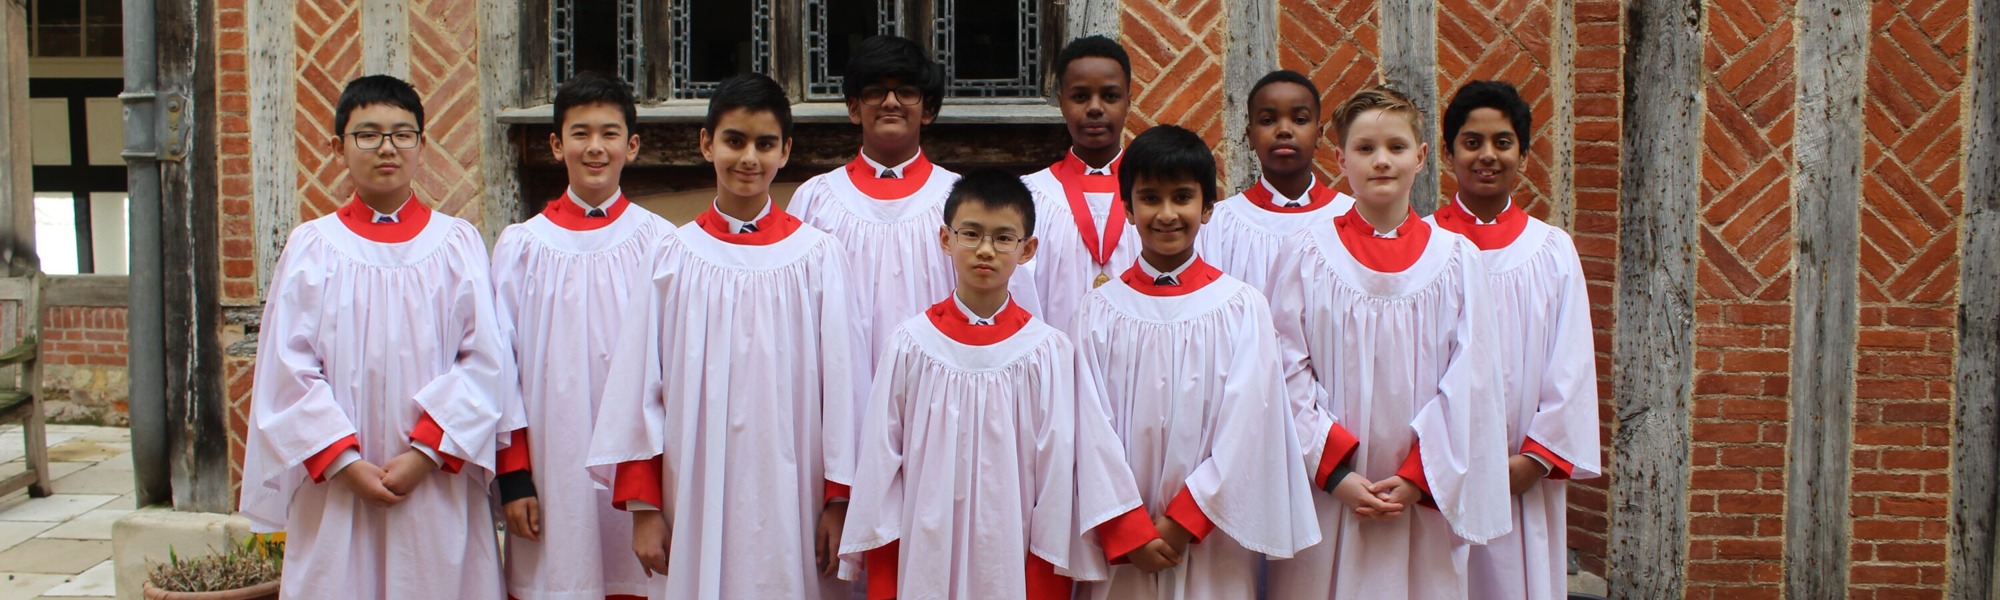 Kings savoy chapel choir (1)